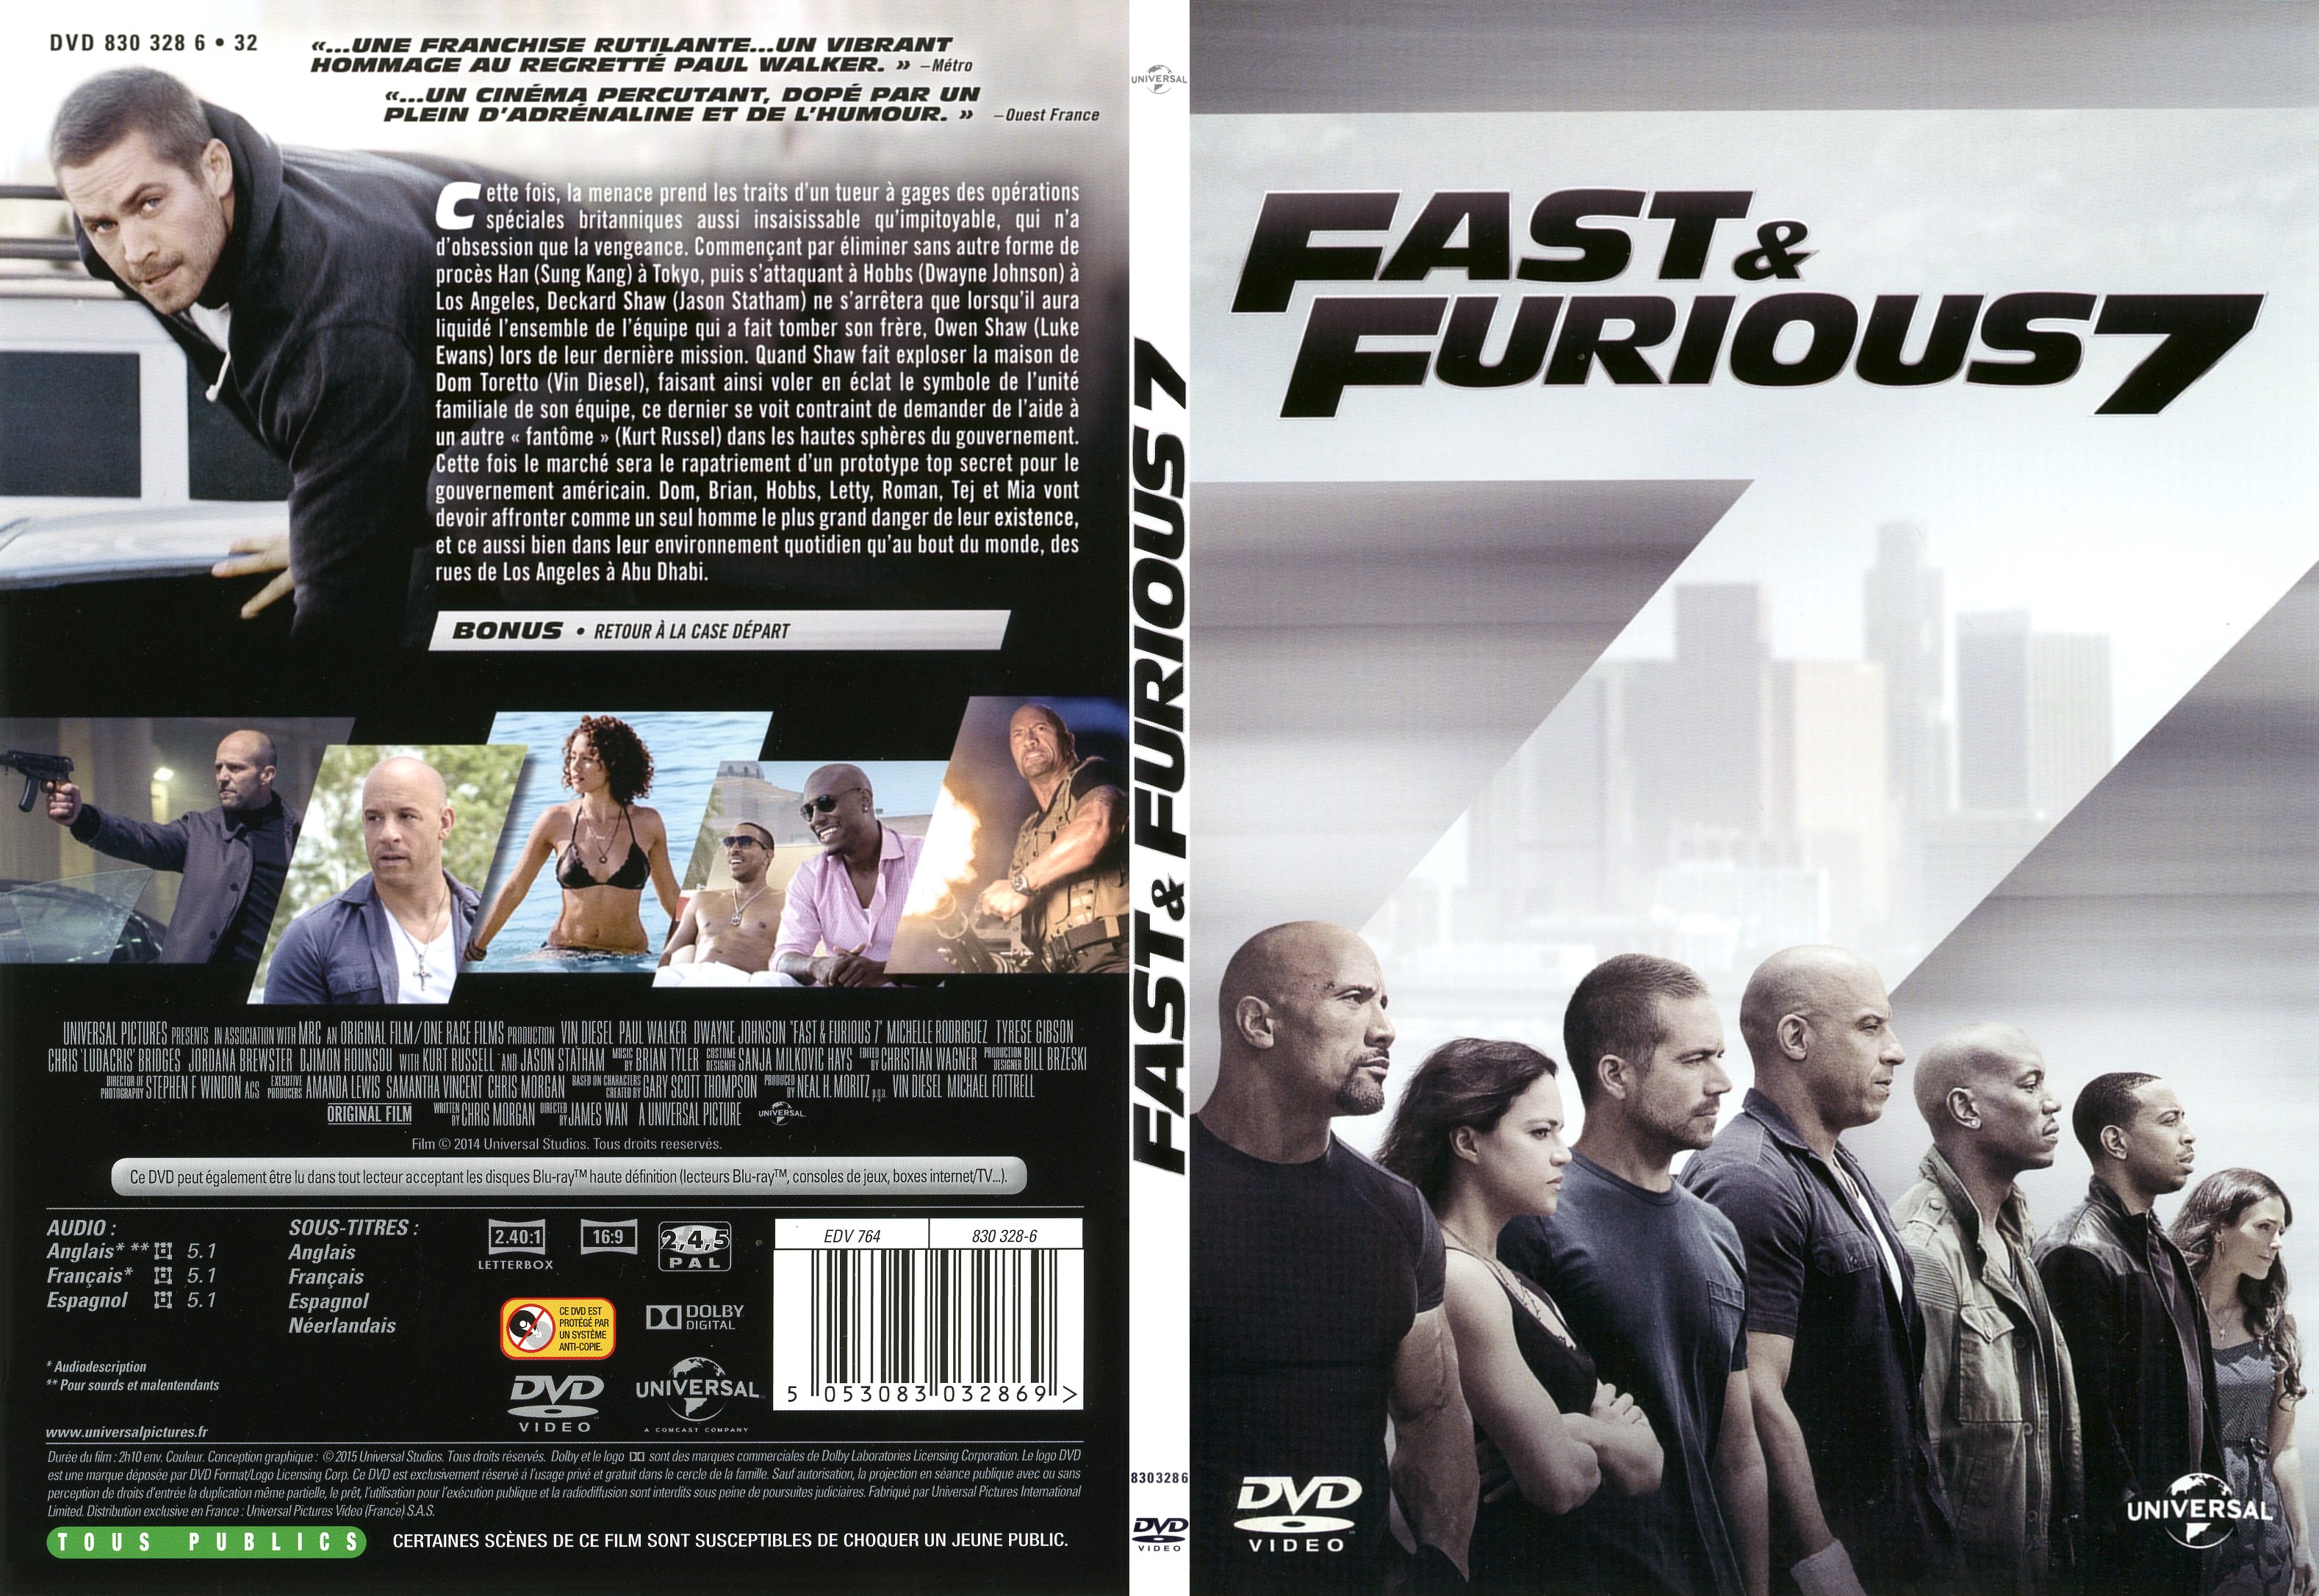 Jaquette DVD Fast & Furious 7 - SLIM